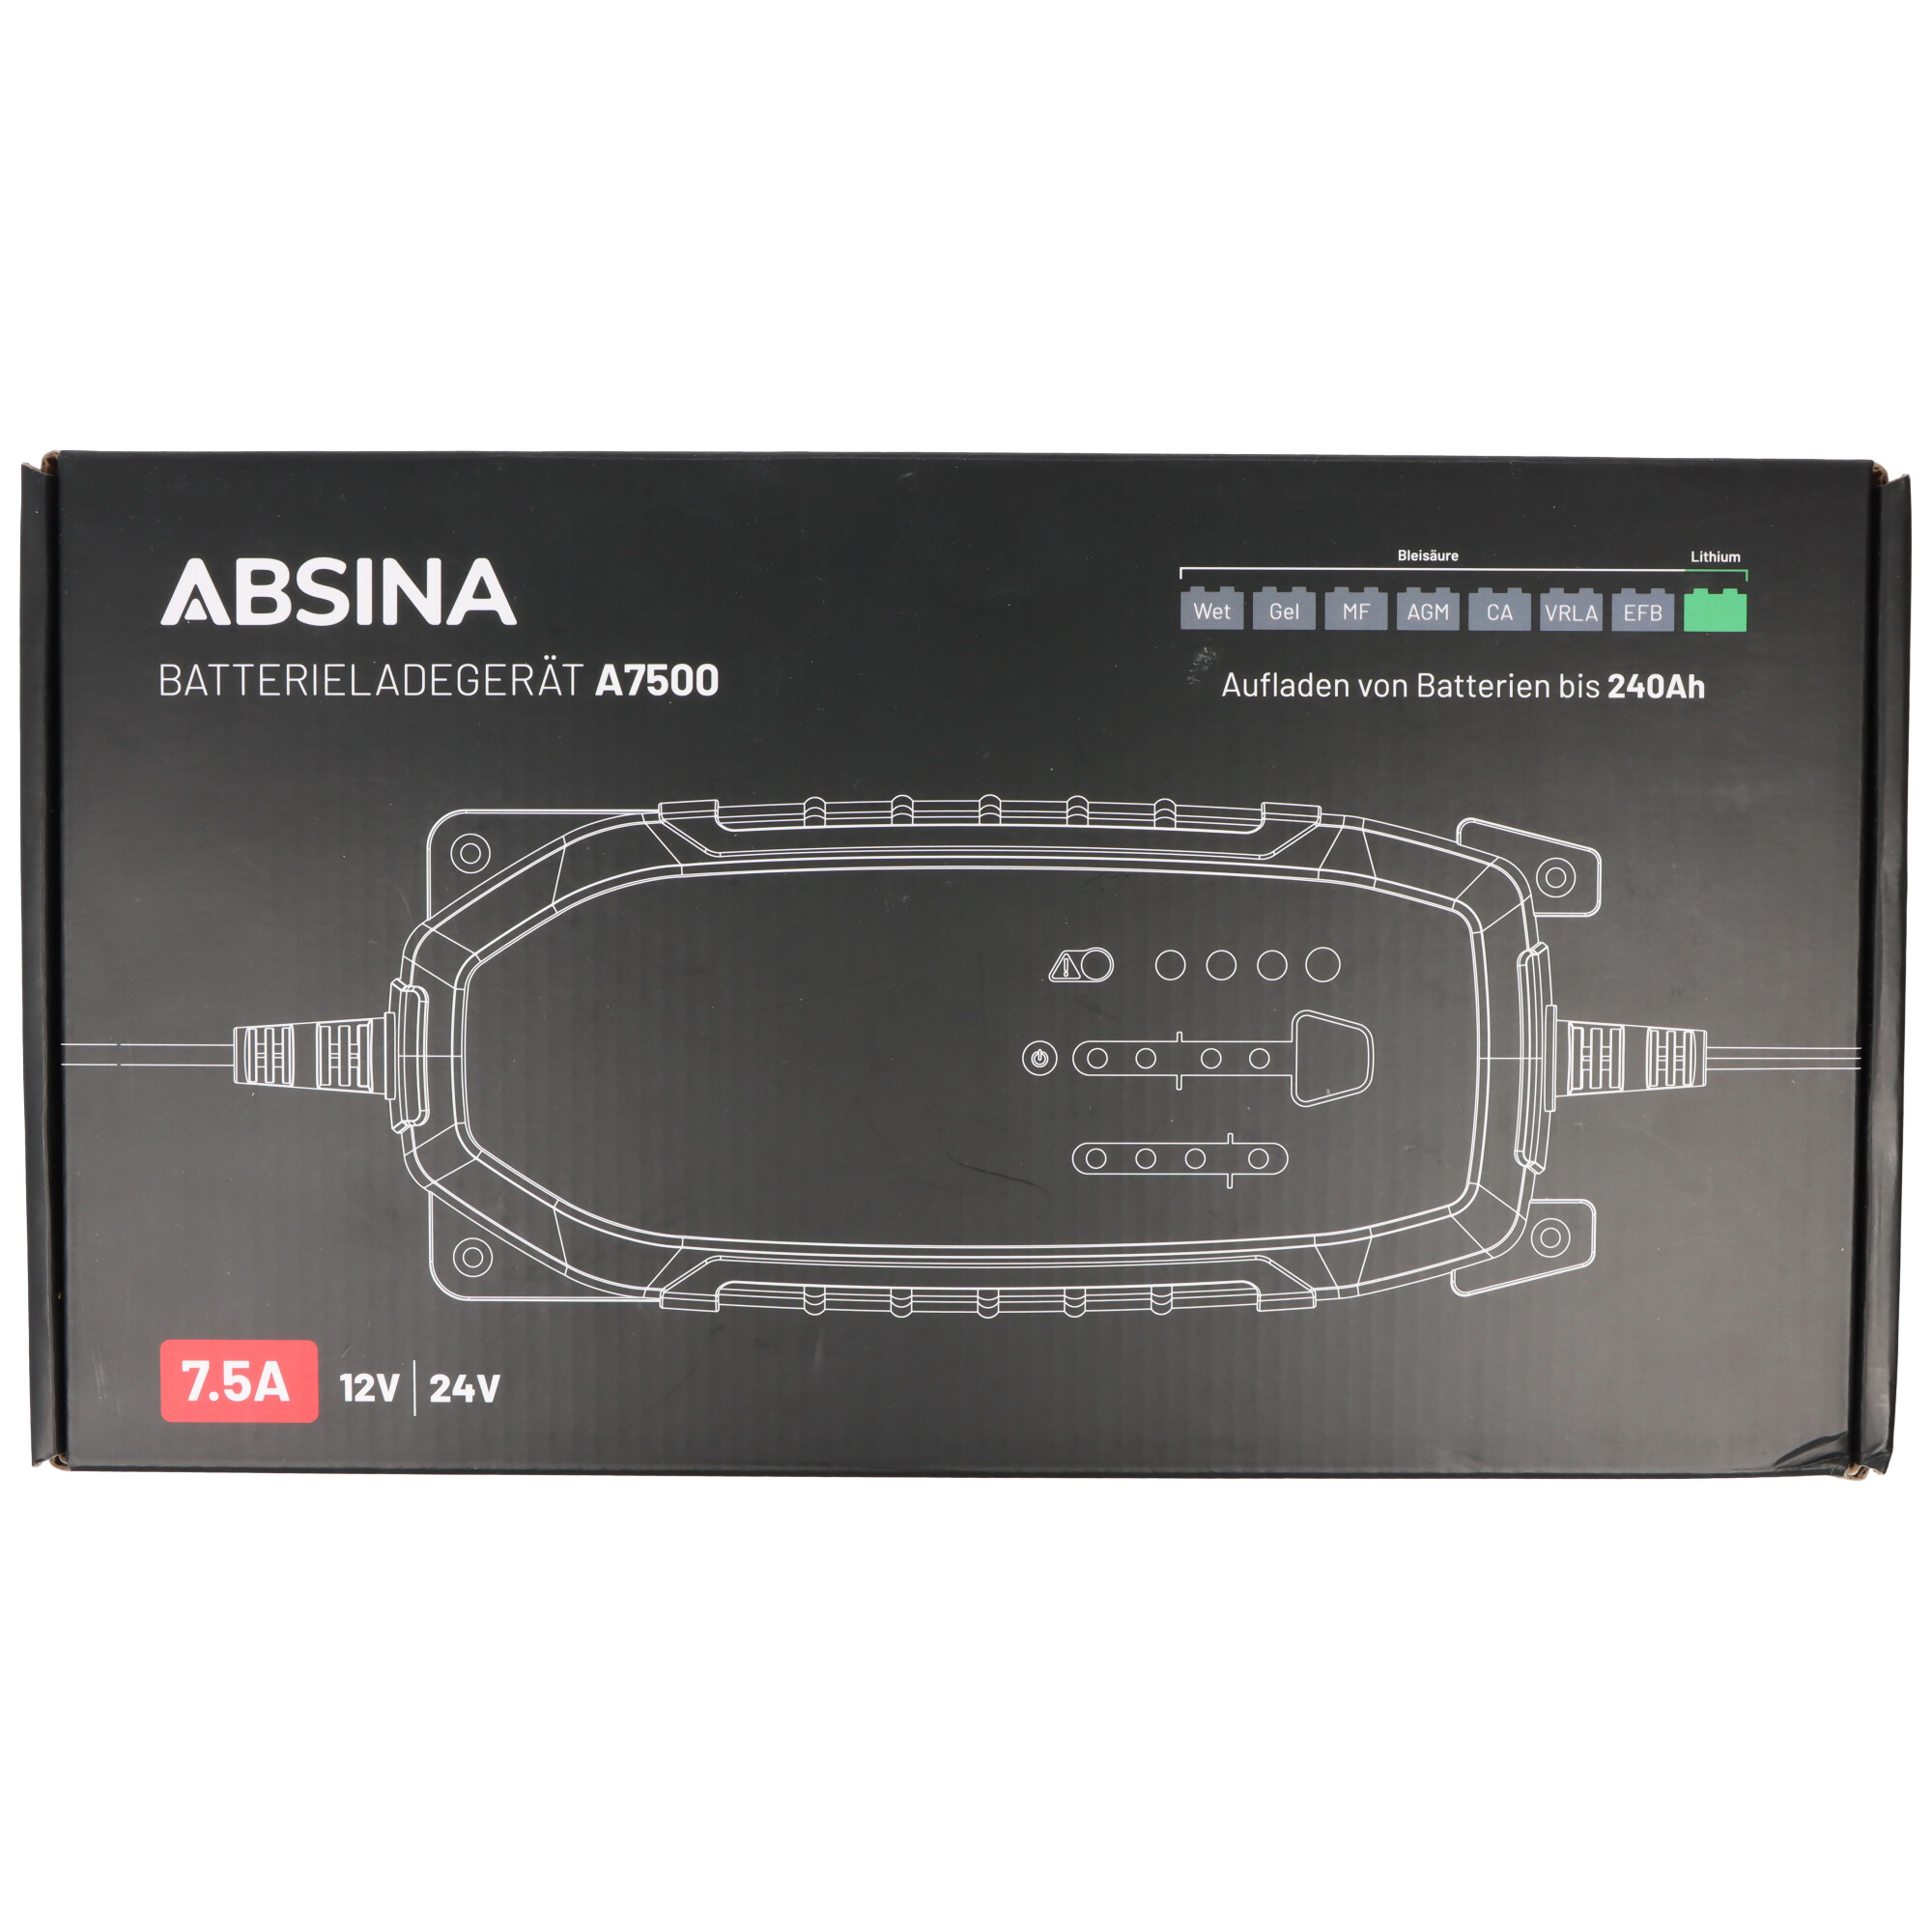 Absina Ladegerät A7500, Ladegerät für 12-24V Blei- und LiFePO4 Akkus, max. Ladestrom 7,5A, ideal für Auto, Motorrad, Wohnmobil